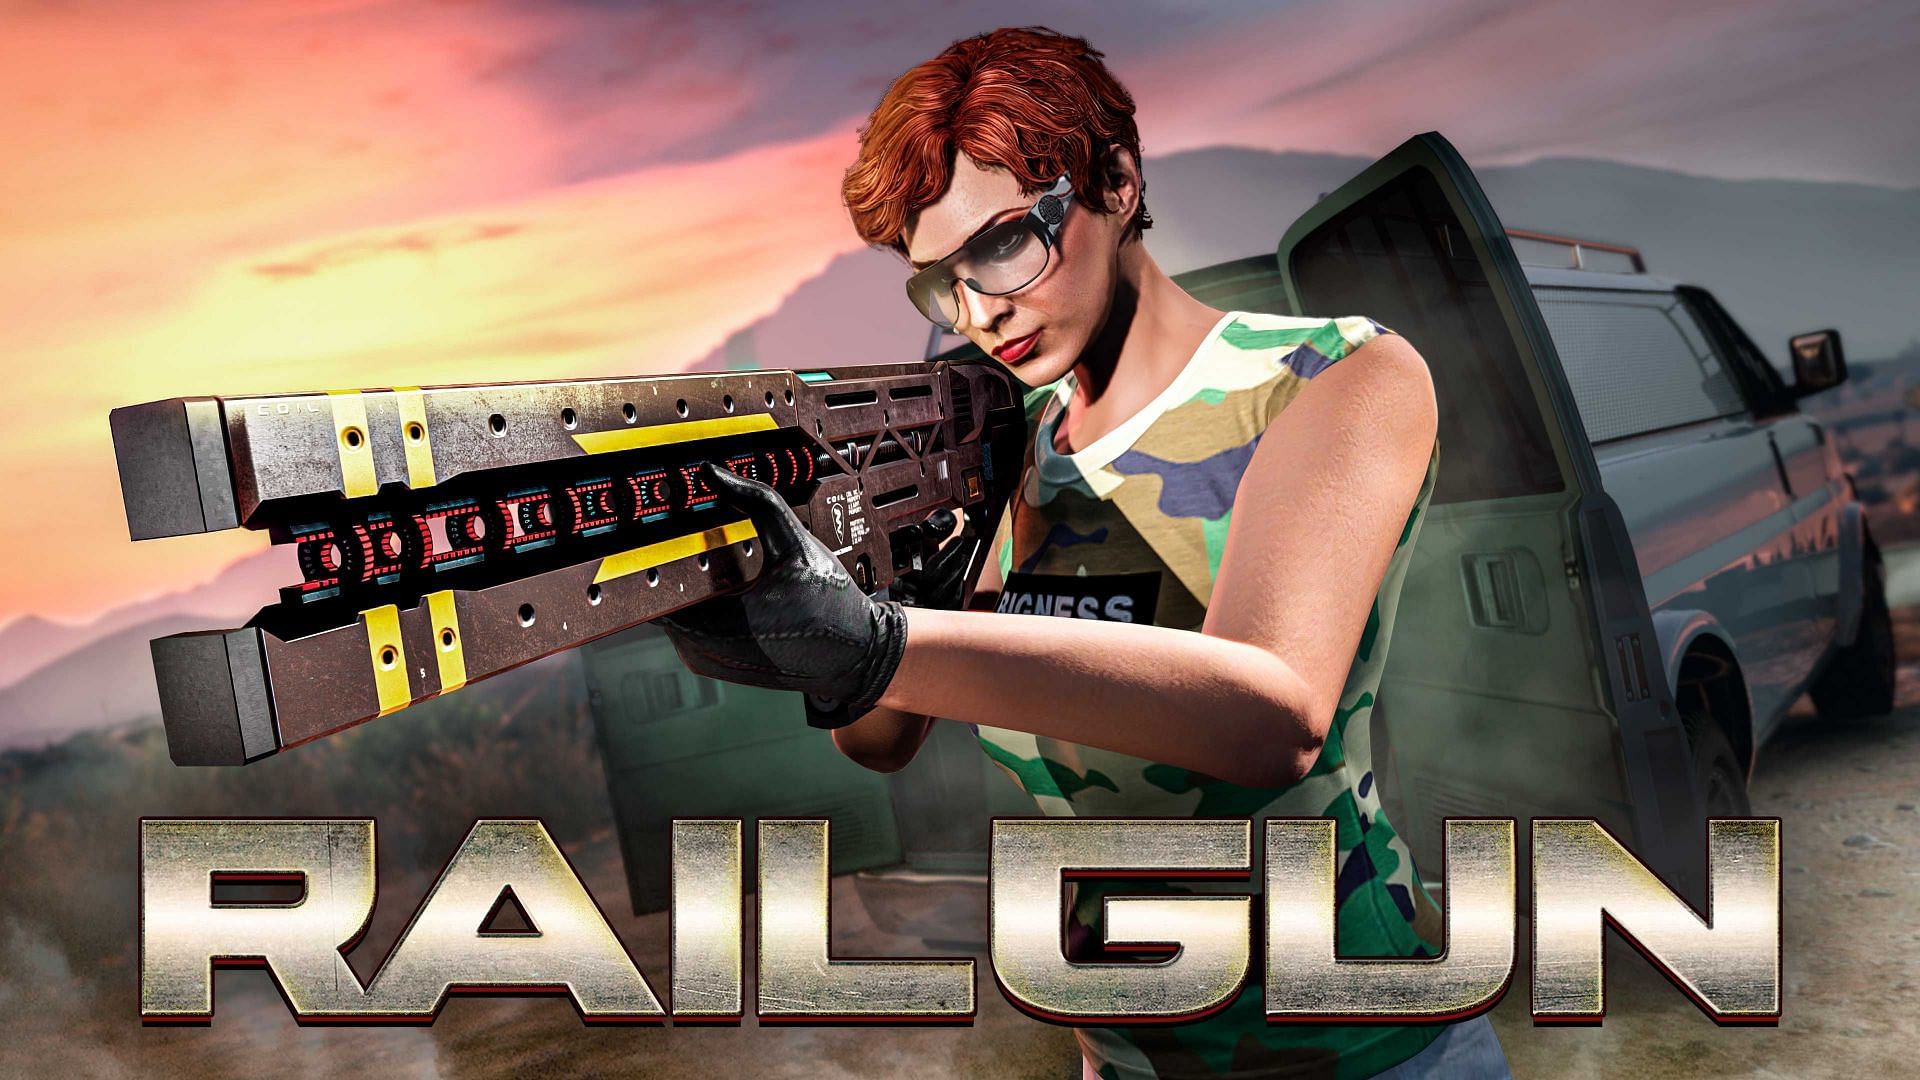 A Railgun (Image via Rockstar Games)